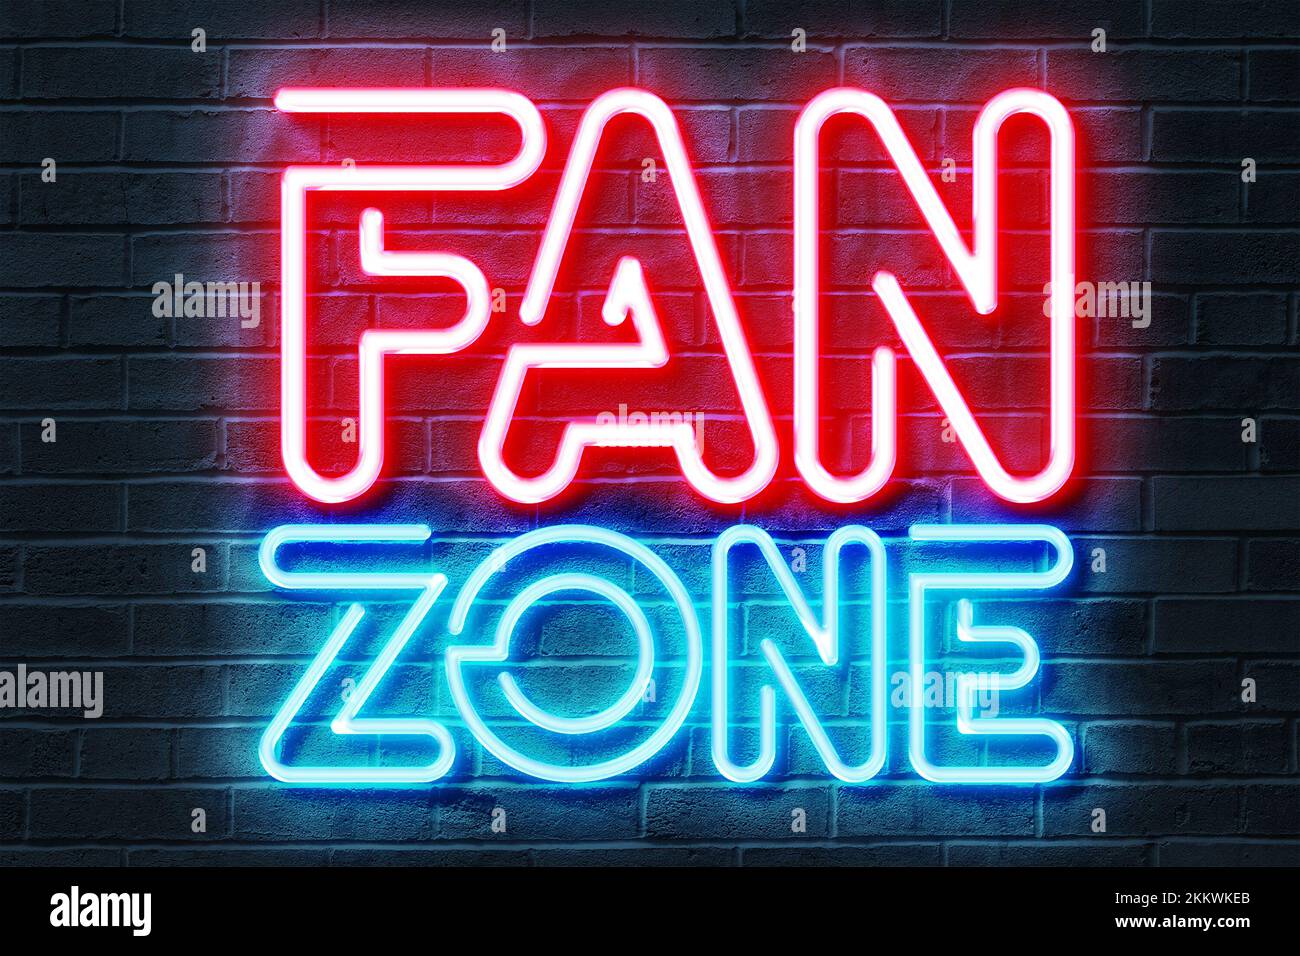 Fan Zone Neon Sign 3D illustration on a dark brick background. Stock Photo